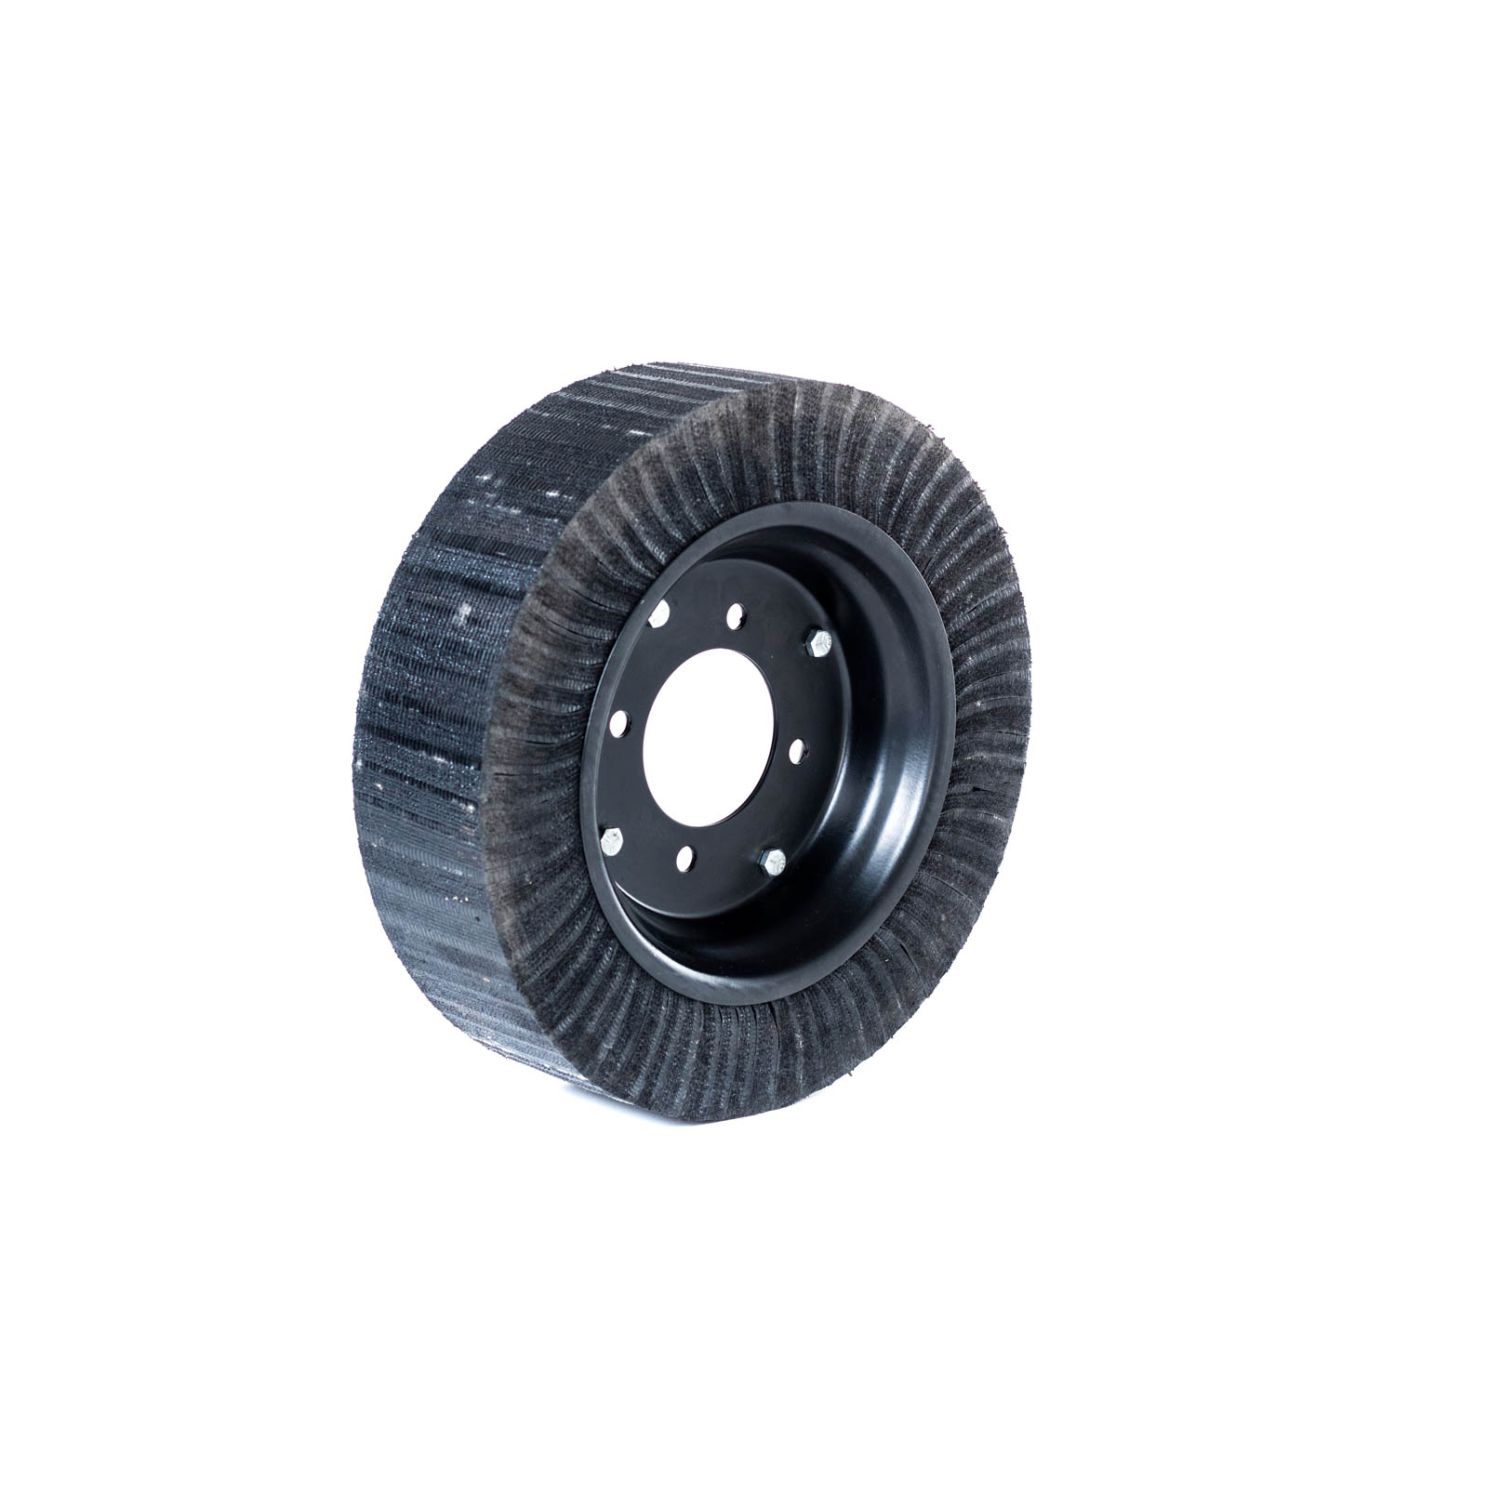 4x8 Laminated Rotary Cutter Tail Wheel Black